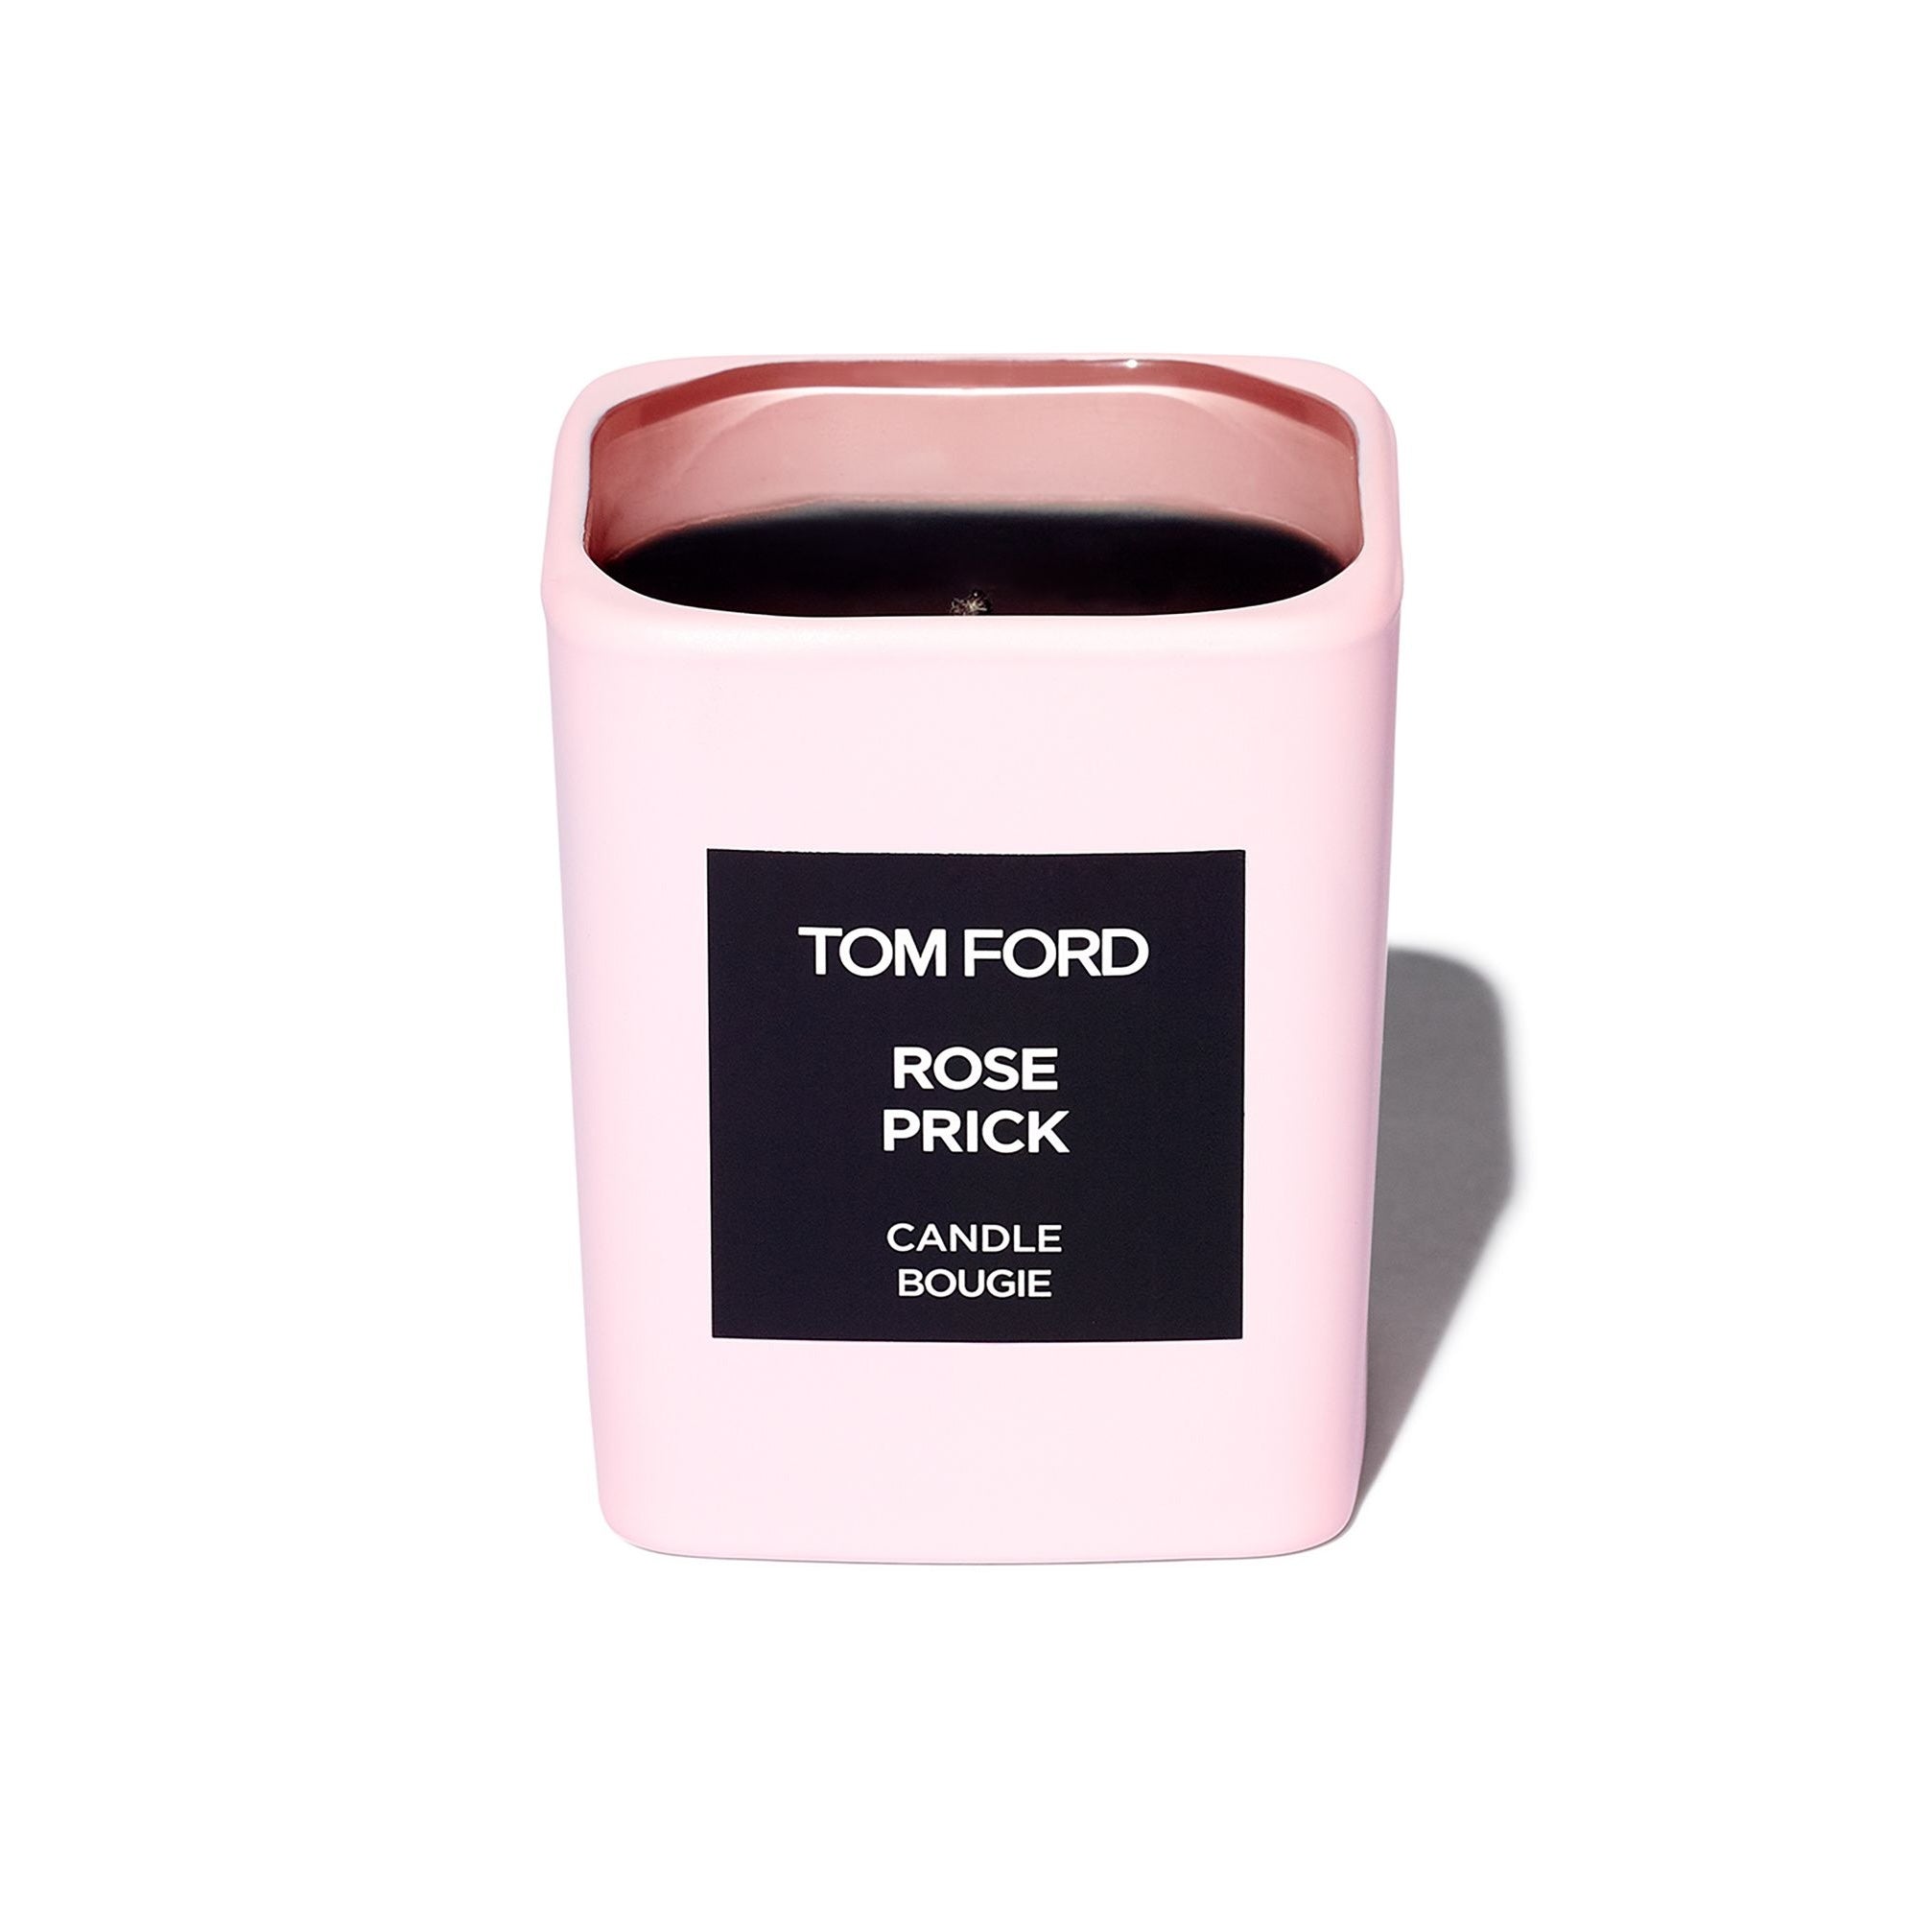 Tom Ford Rose Prick Candle | My Perfume Shop Australia